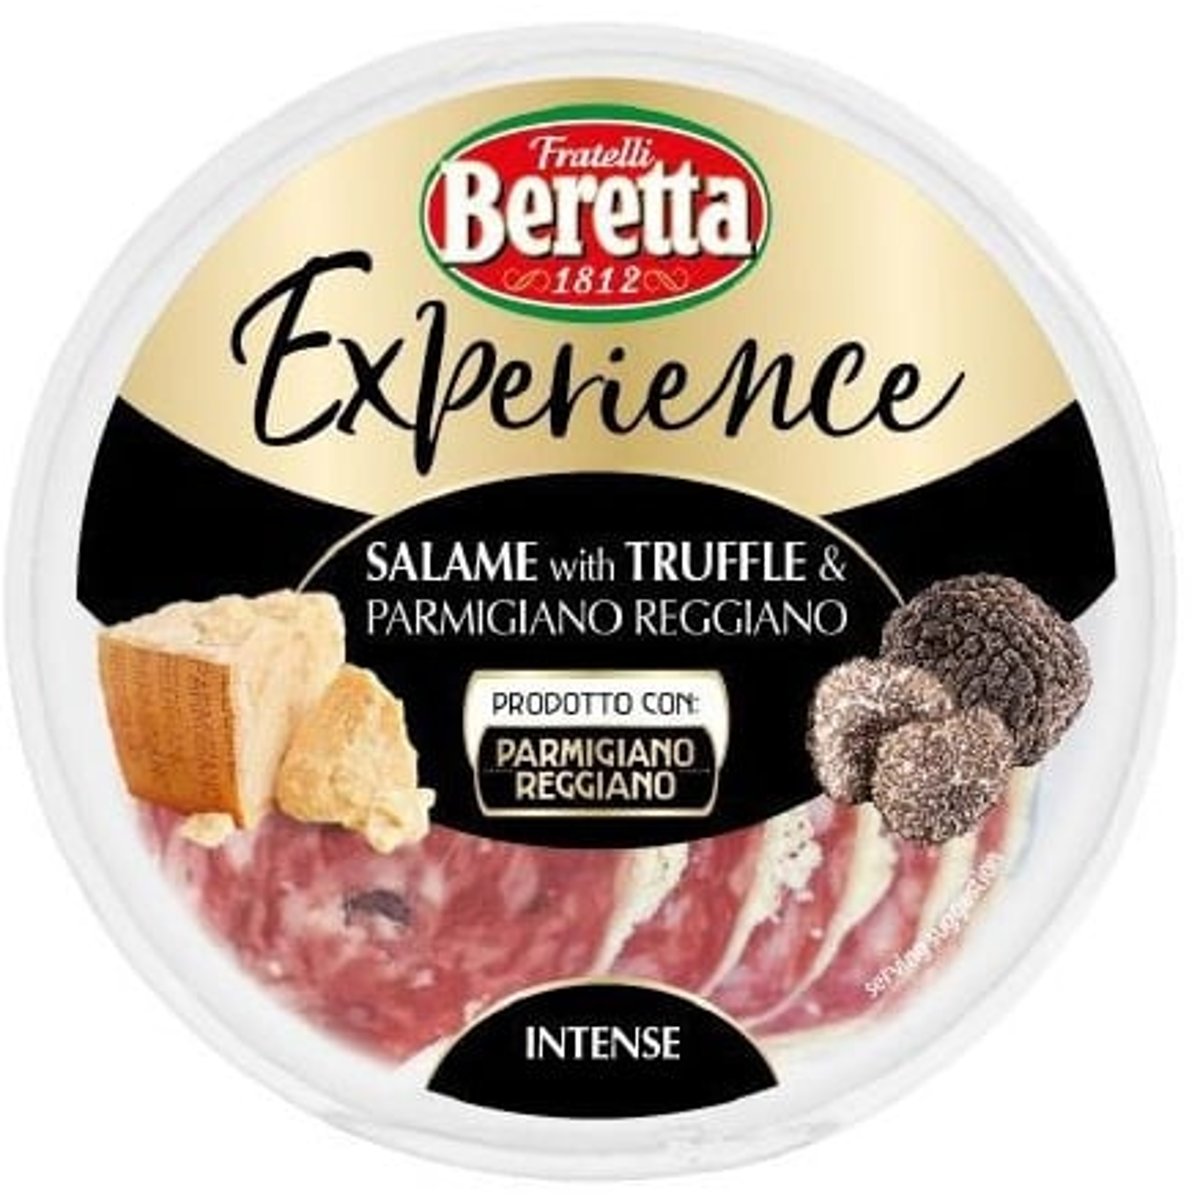 Fratelli Beretta Experience Truffle Parmigiano